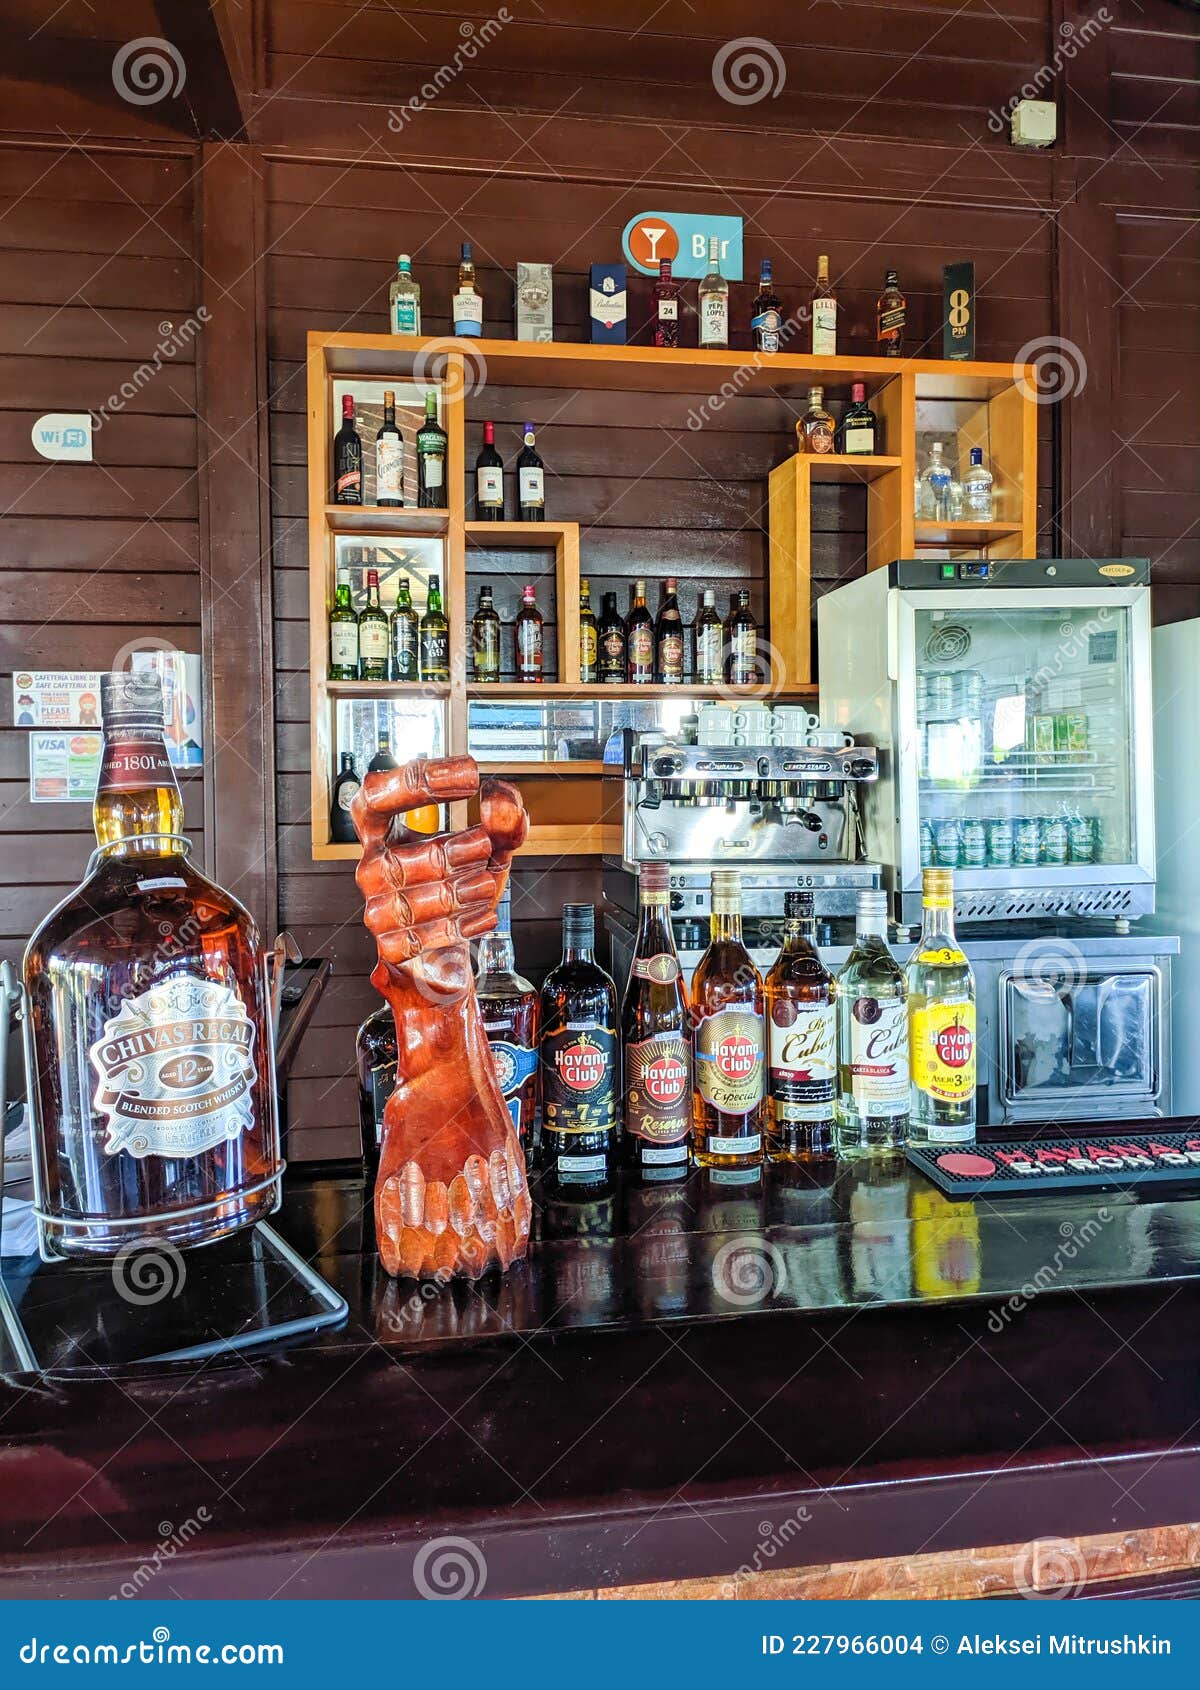 Albums 91+ Images cayo coco rum bar & restaurante photos Full HD, 2k, 4k